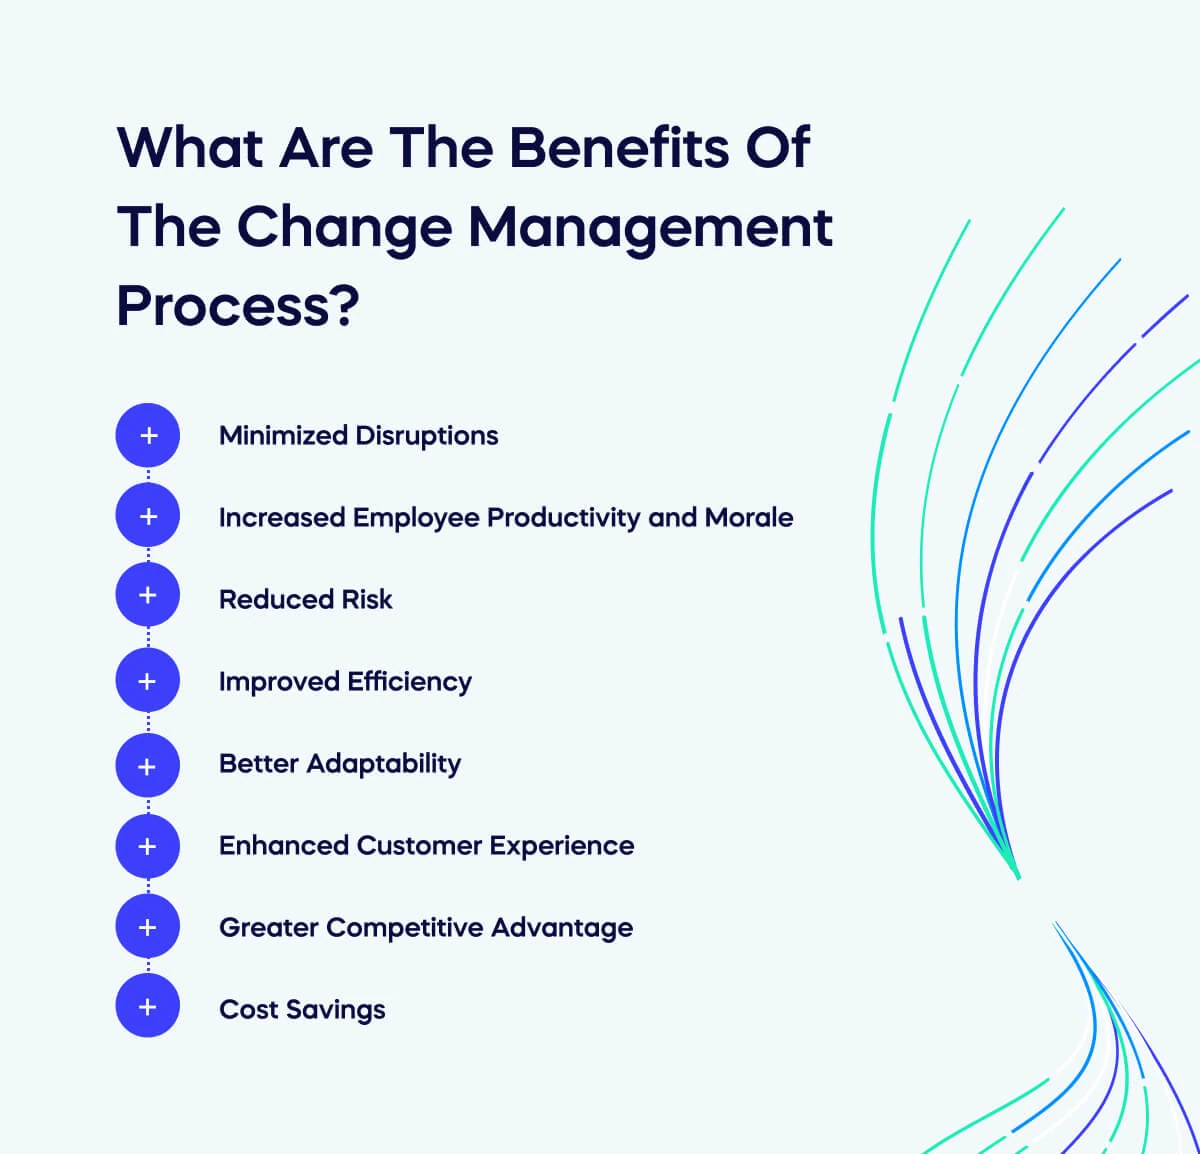 Change management benefits